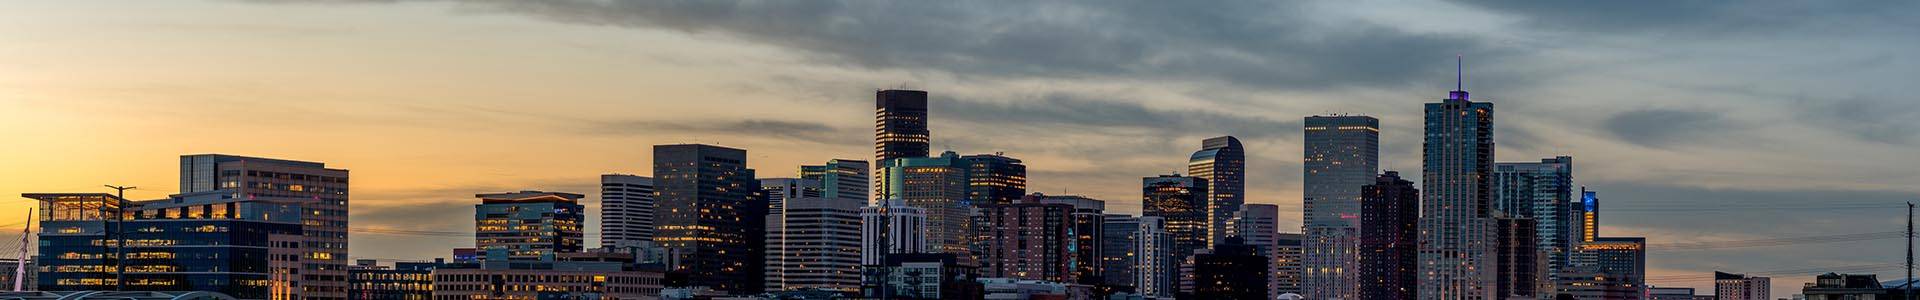 IRR-Denver: Insights into the Local Market